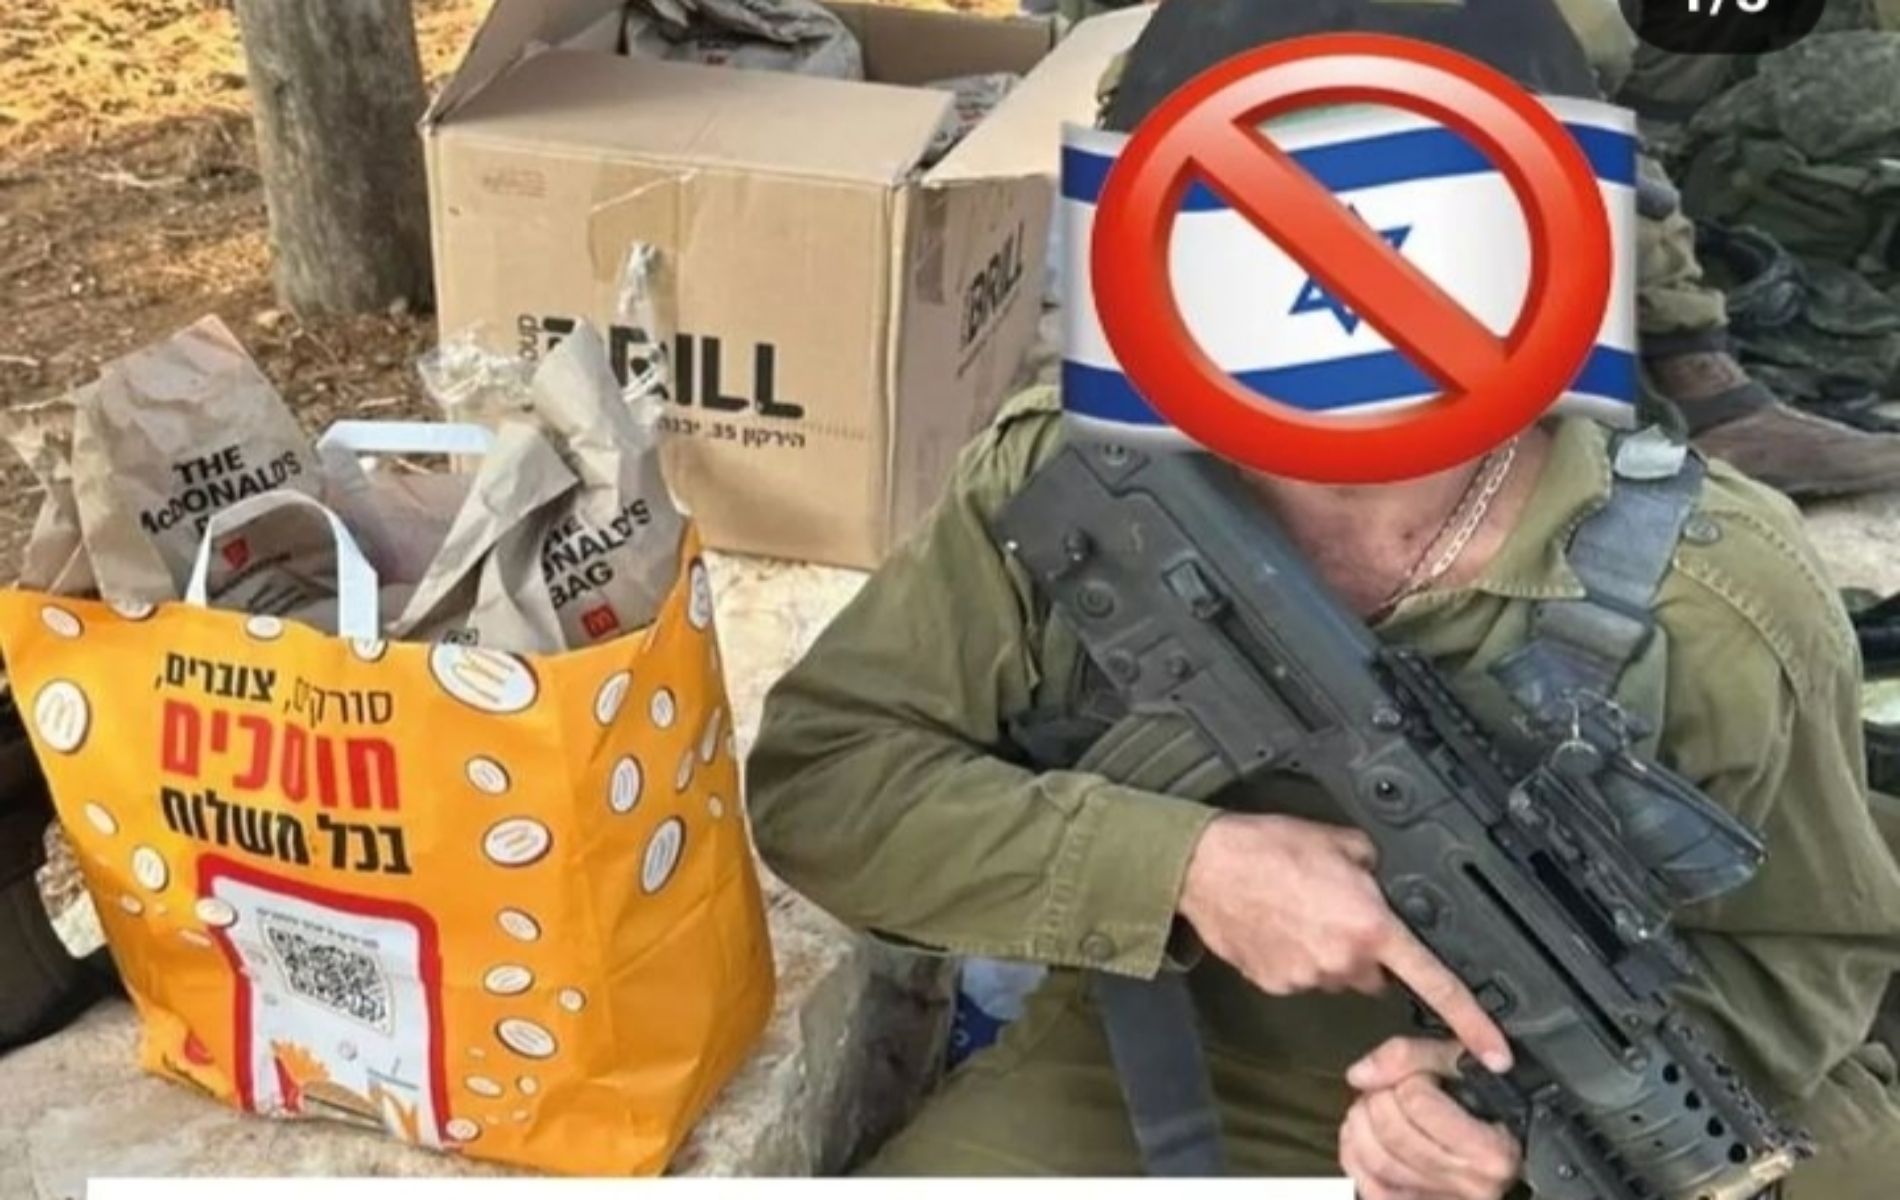 McDonald's diboikot karena memberikan makanan dan diskon kepada para tentara Israel yang berperang melawan Palestina.